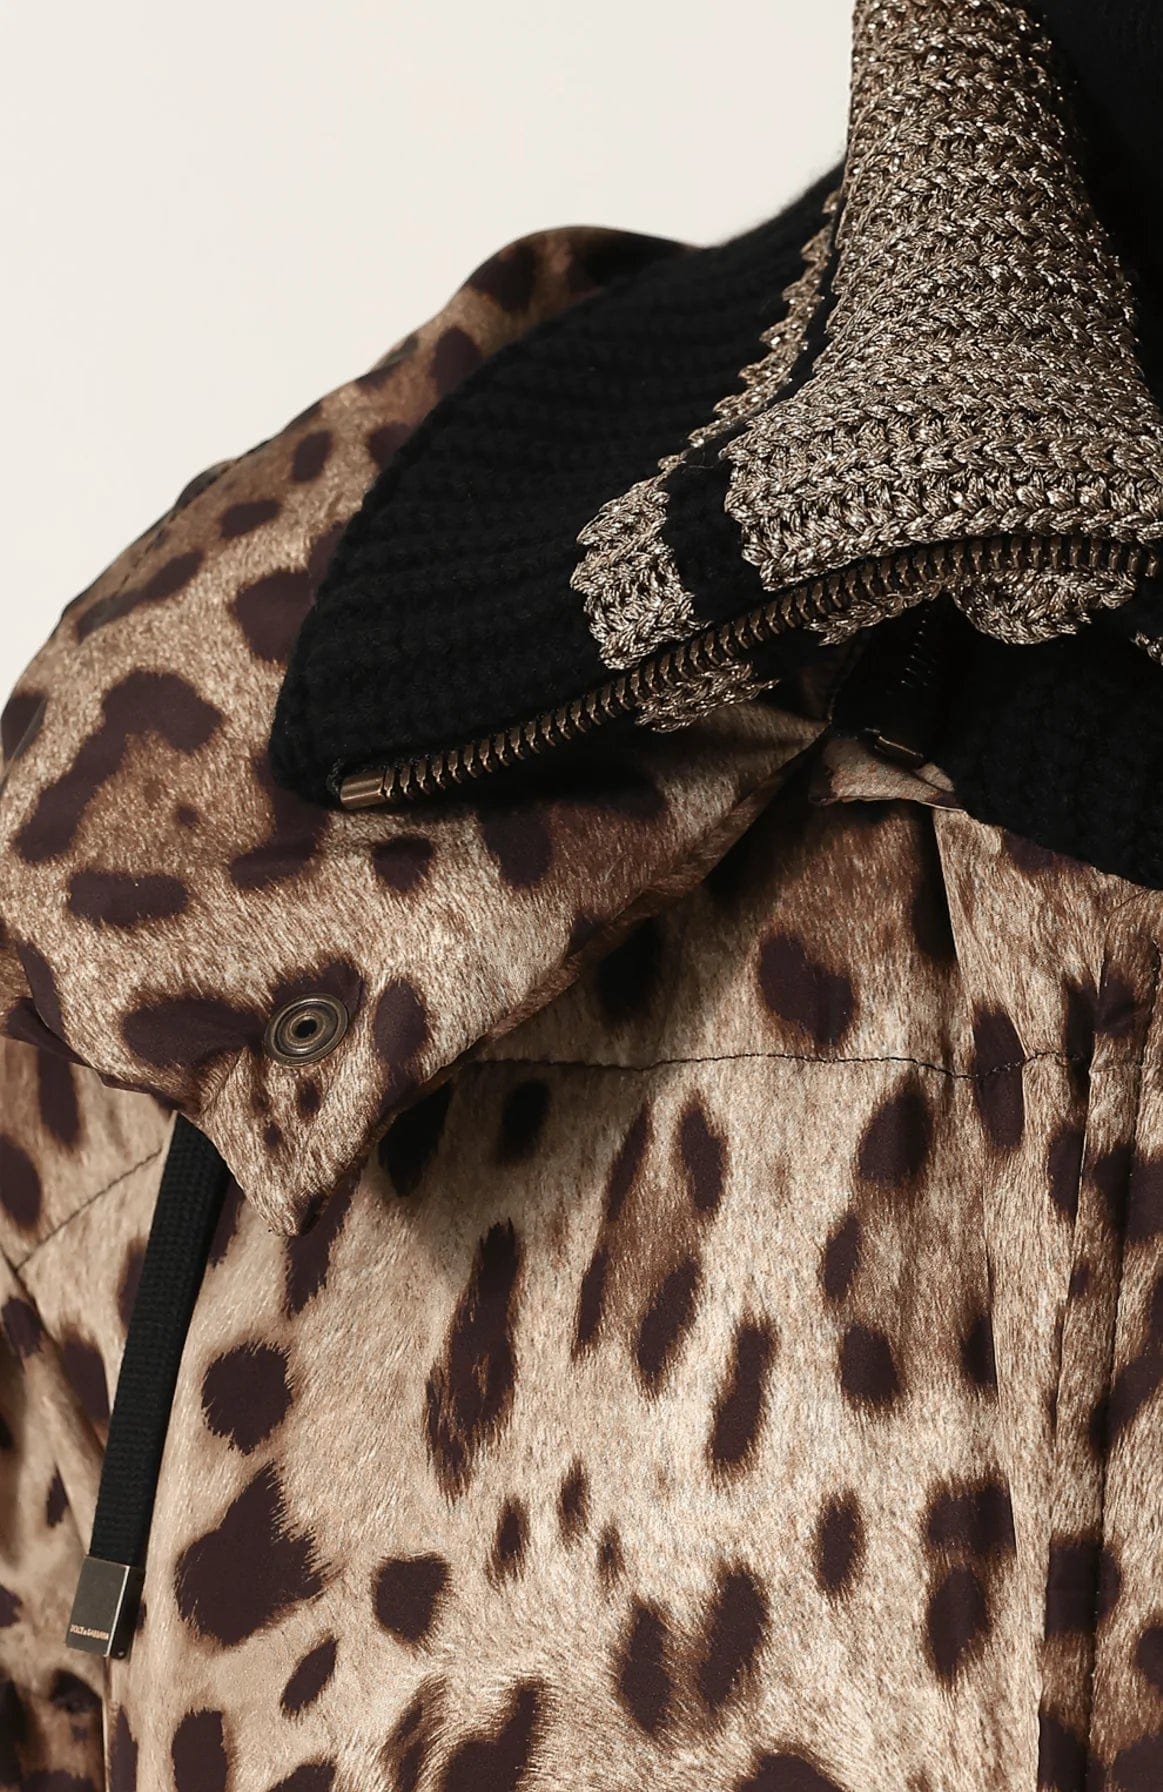 Dolce & Gabbana Leopard Print Coat